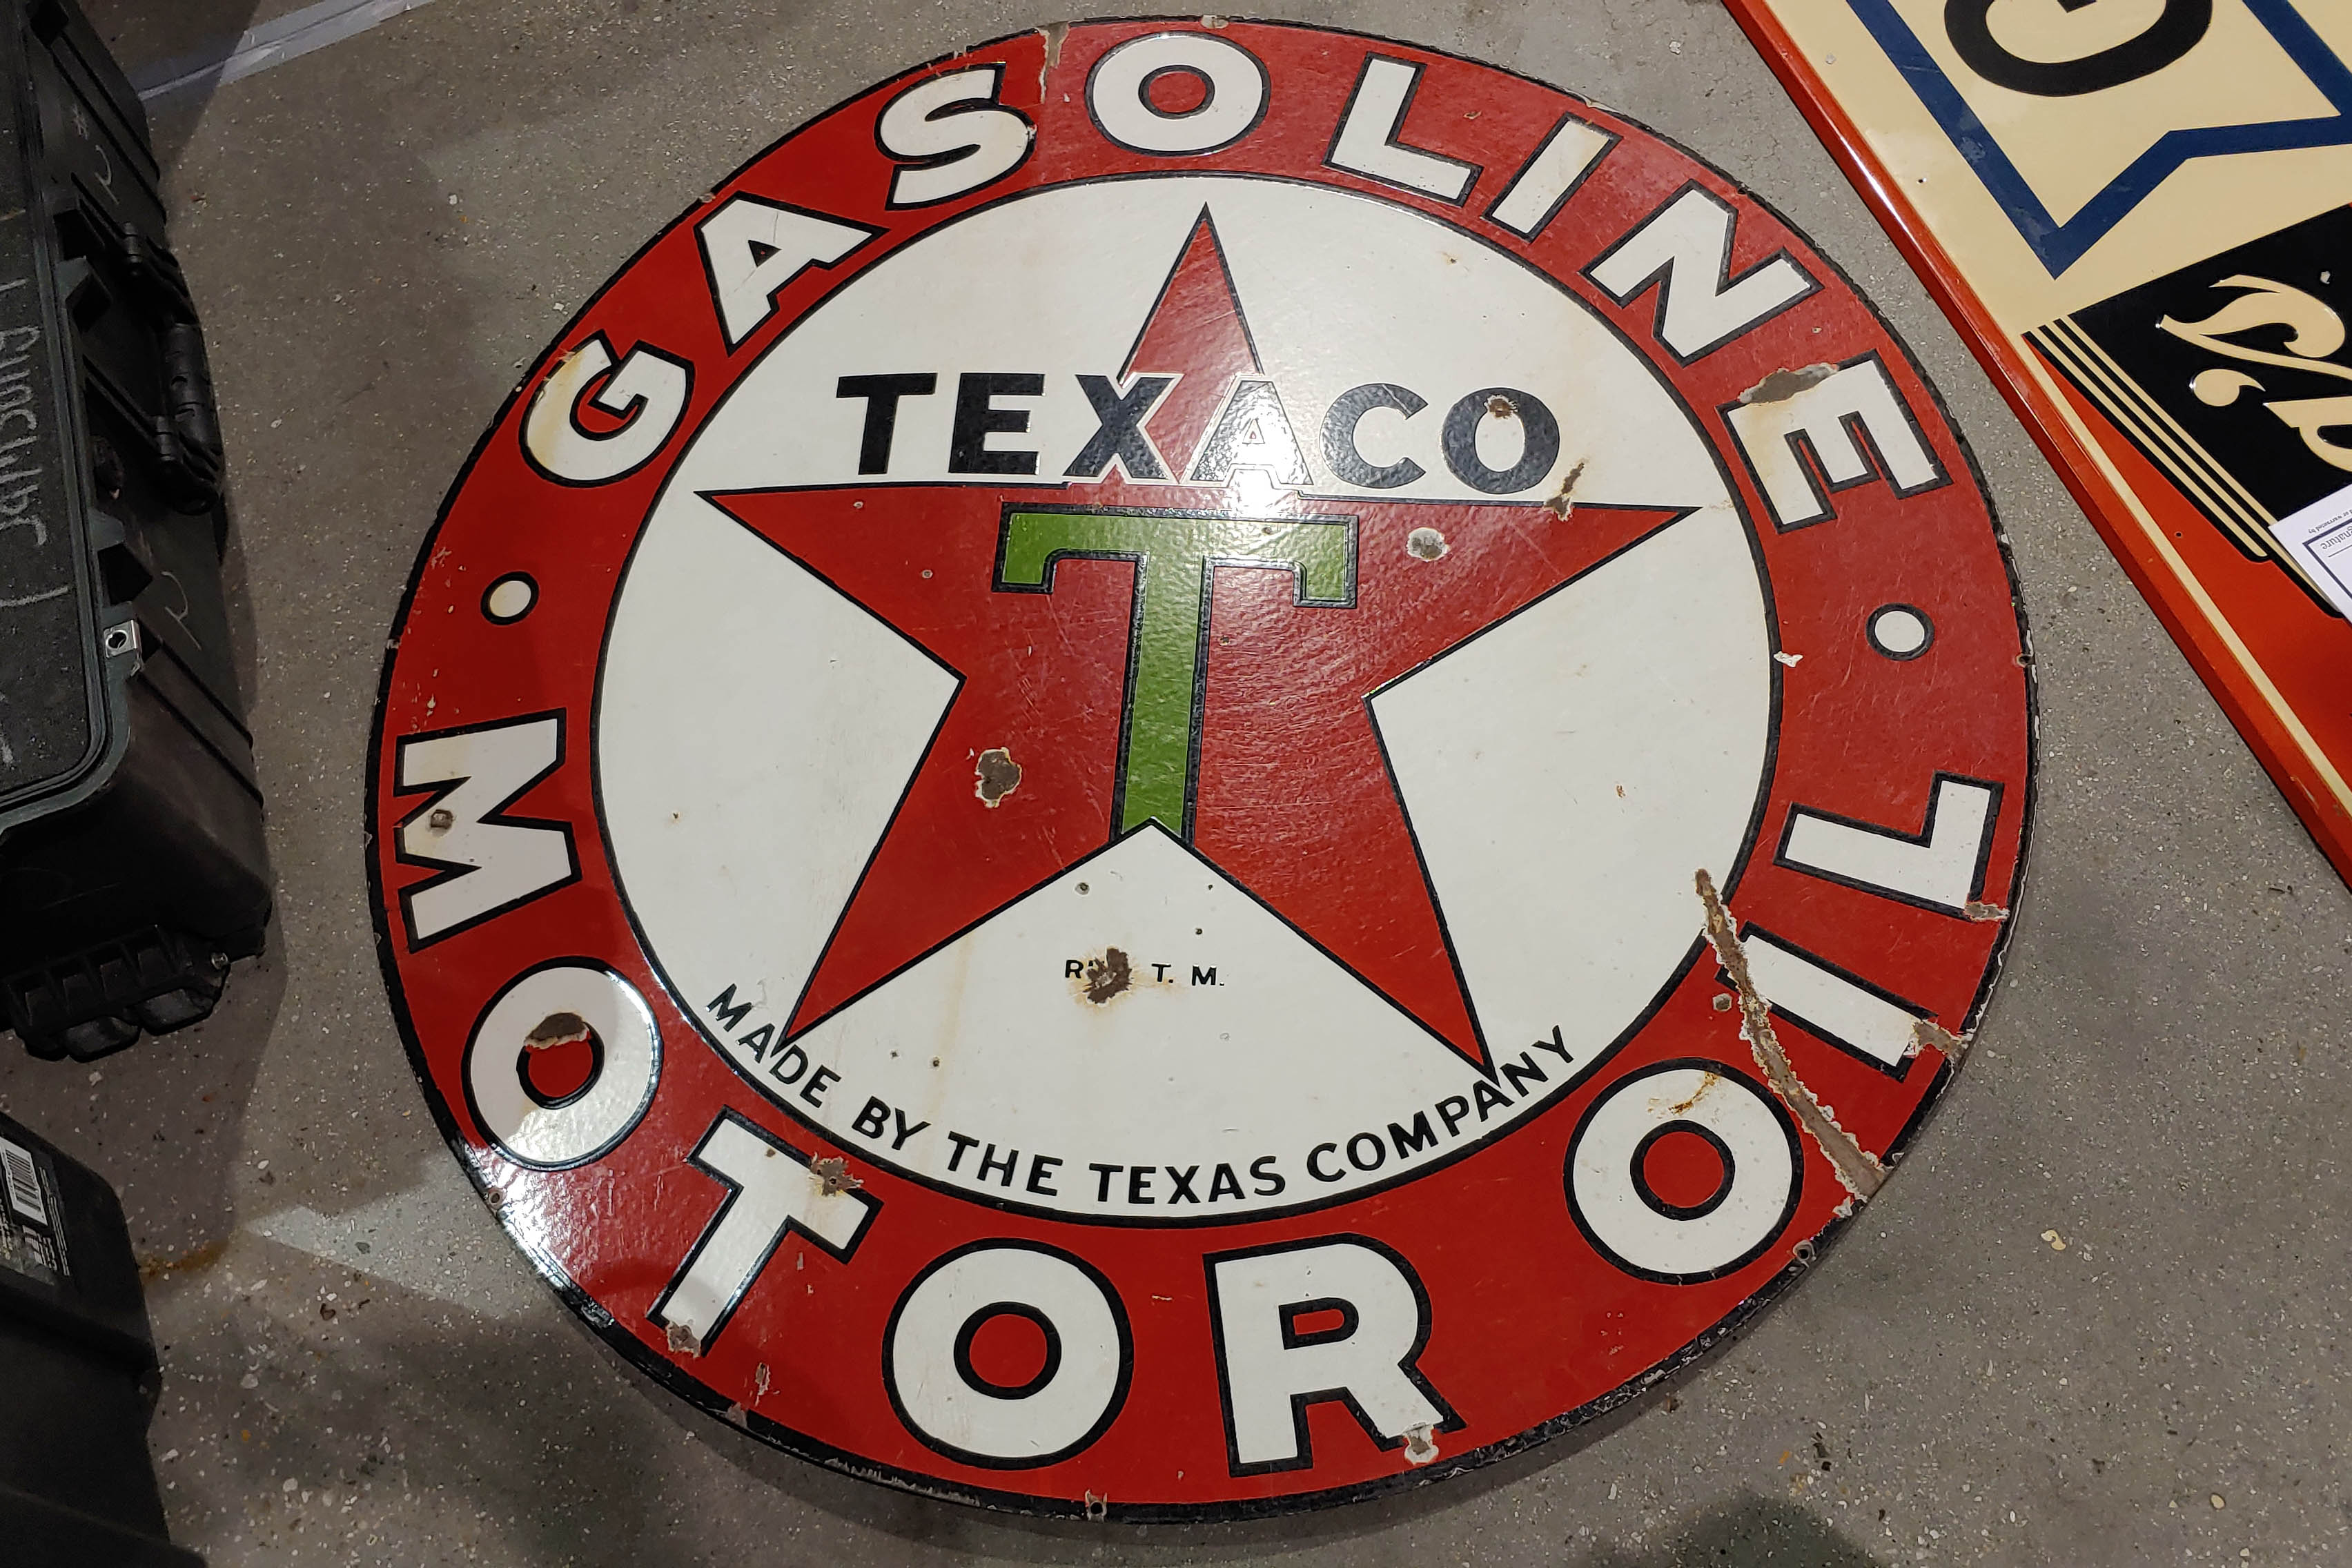 0th Image of a N/A TEXACO GASOLINE GASOLINE & MOTOR OIL